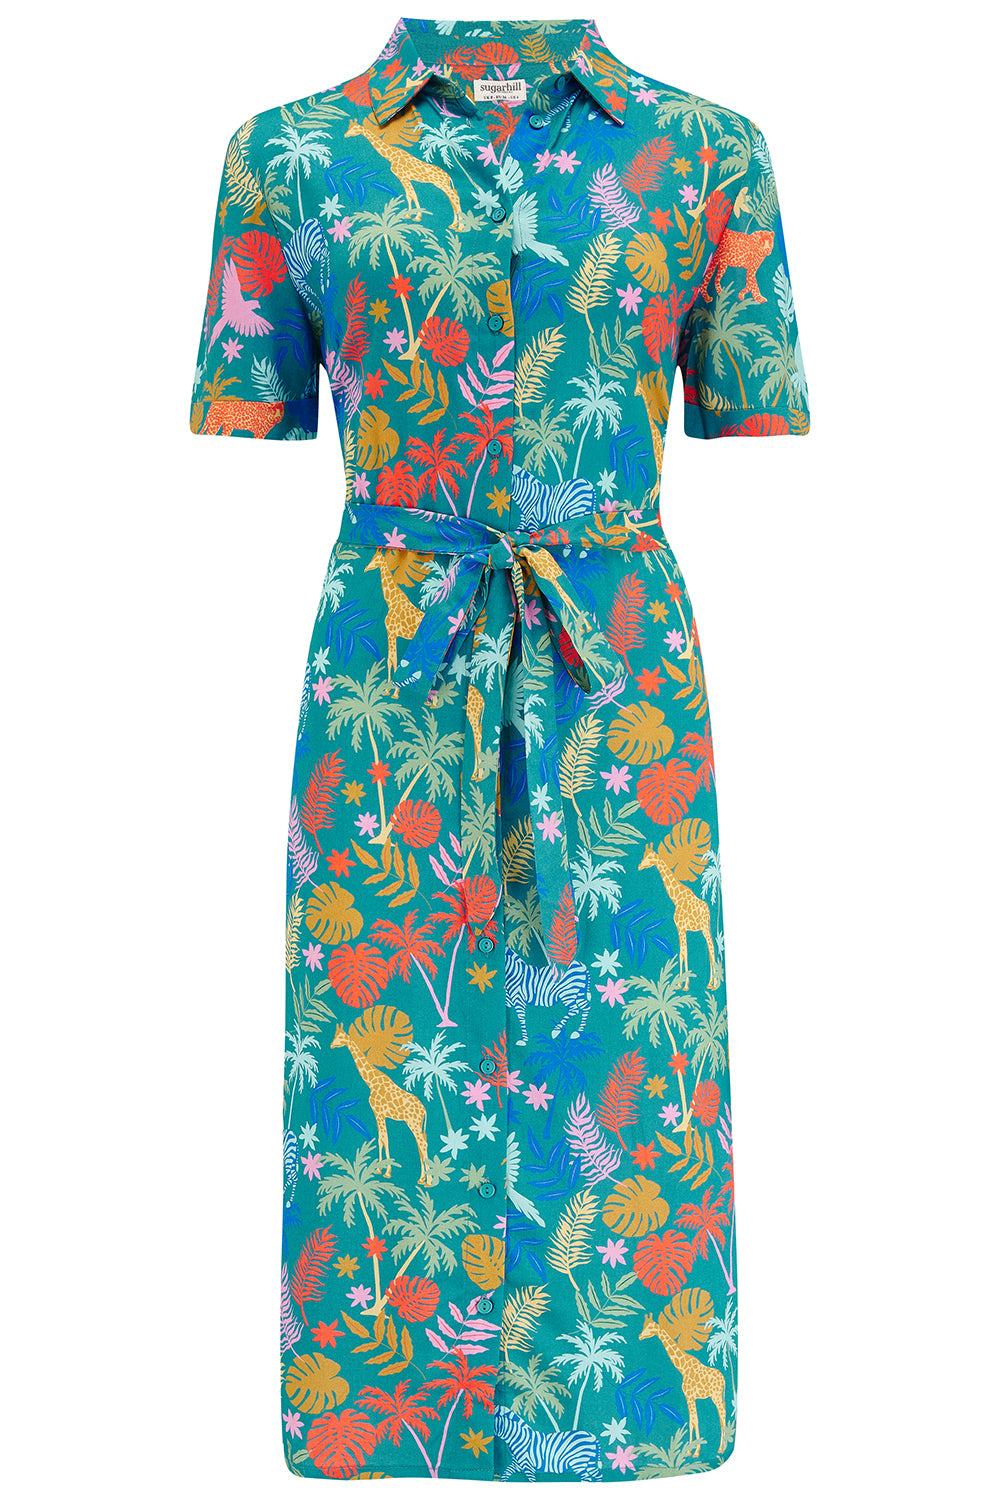 Sugarhill Brighton Women's Blue Justine Midi Shirt Dress Teal, Rainbow Jungle In Multi